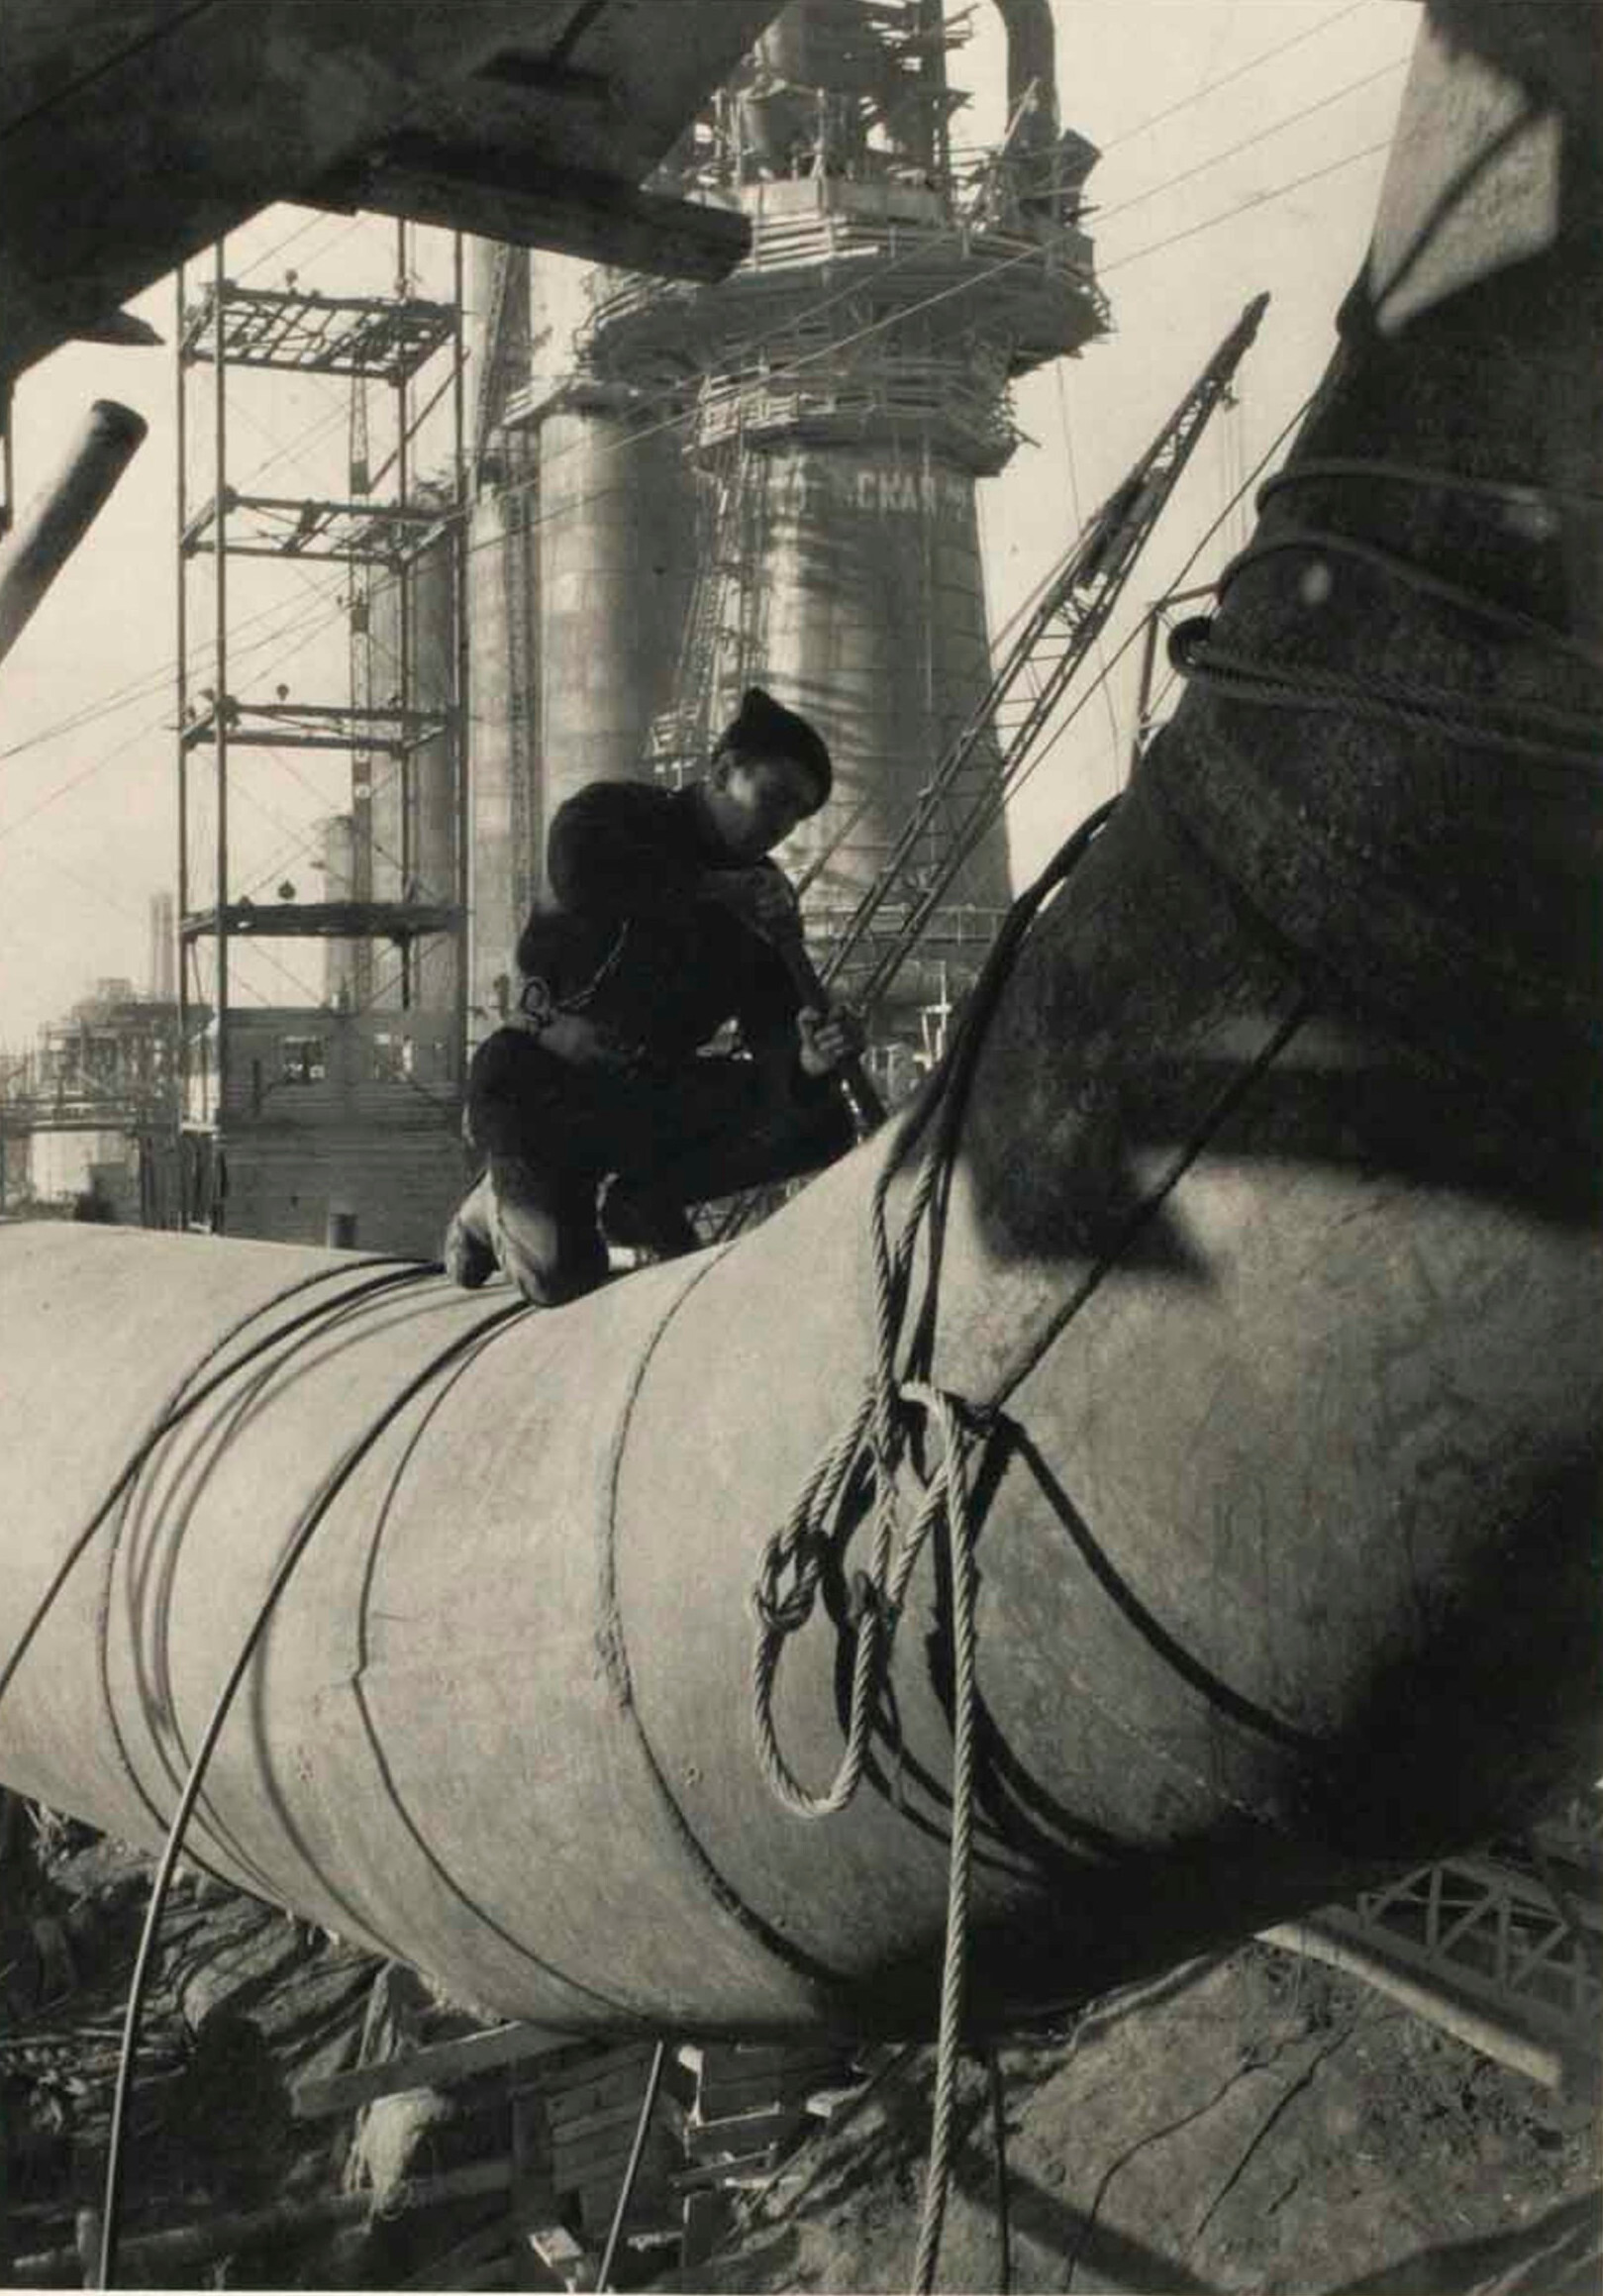 Сталевар, Магнитогорск, 1931 год. Фотограф Маргарет Бурк-Уайт